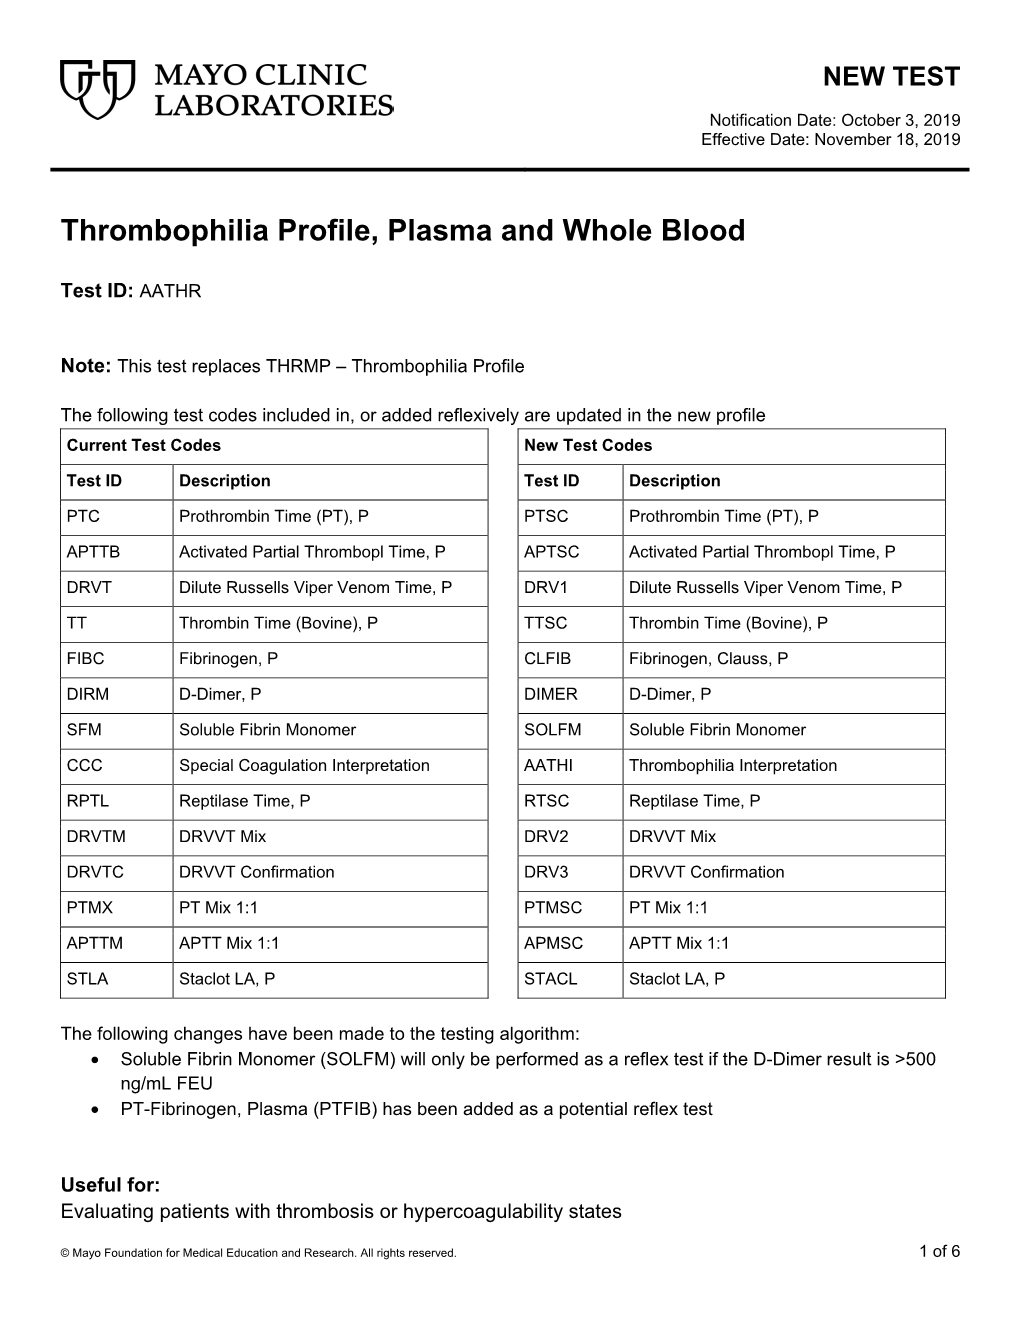 Thrombophilia Profile, Plasma and Whole Blood